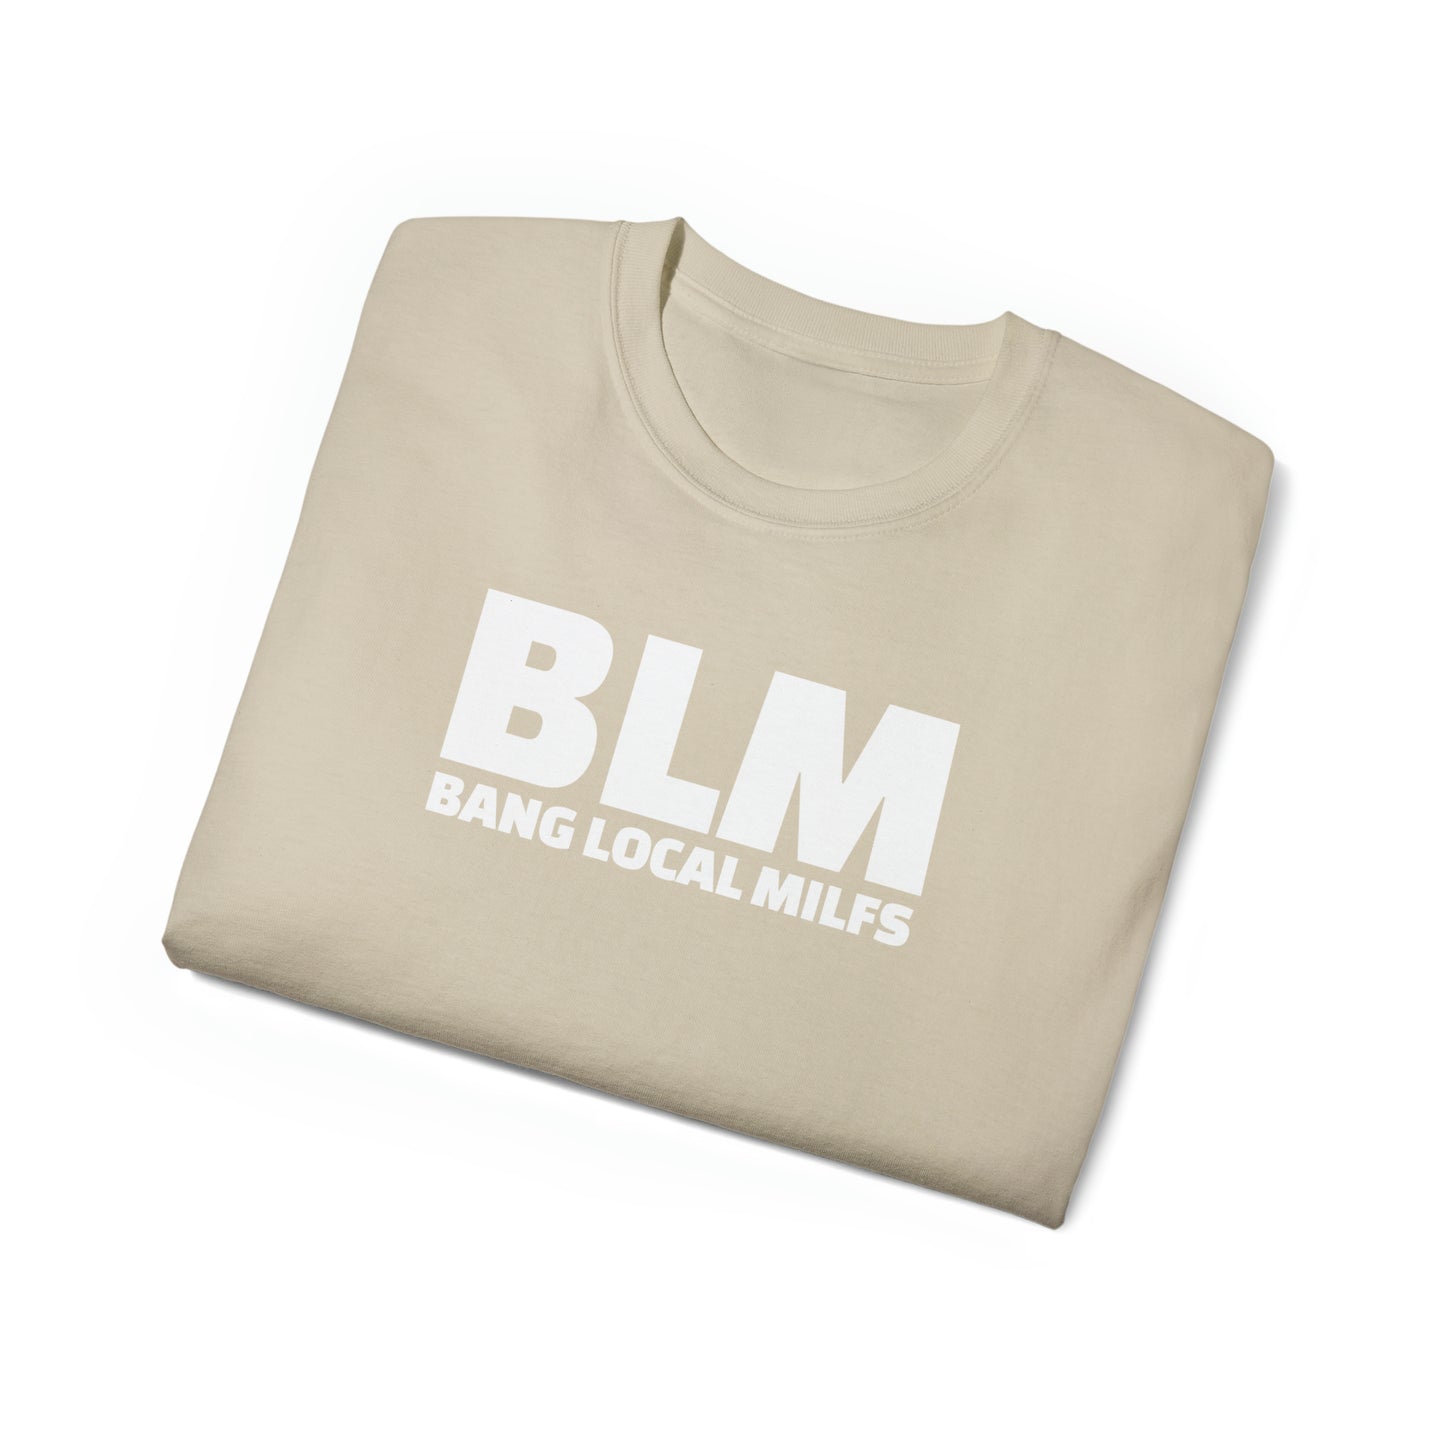 BLM Tee - Straight Men's Club